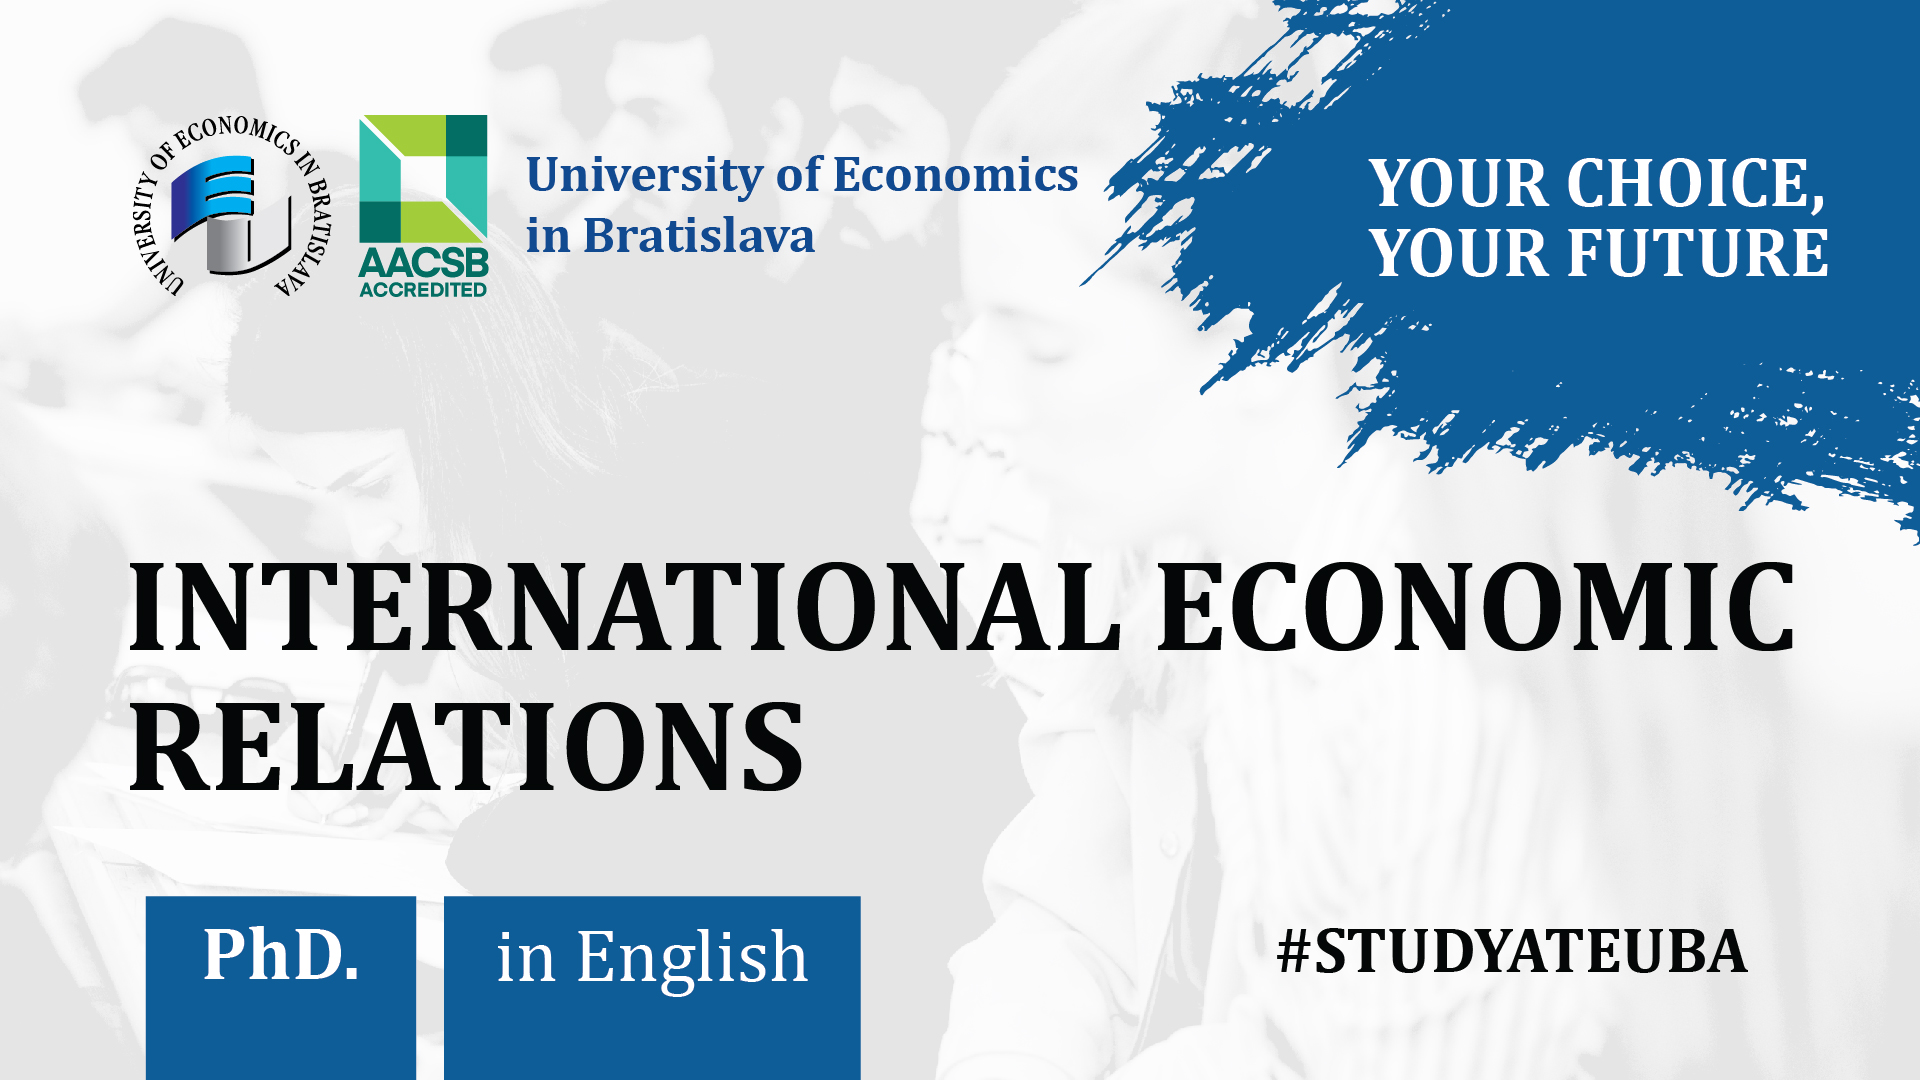 International Economic Relations - PhD.